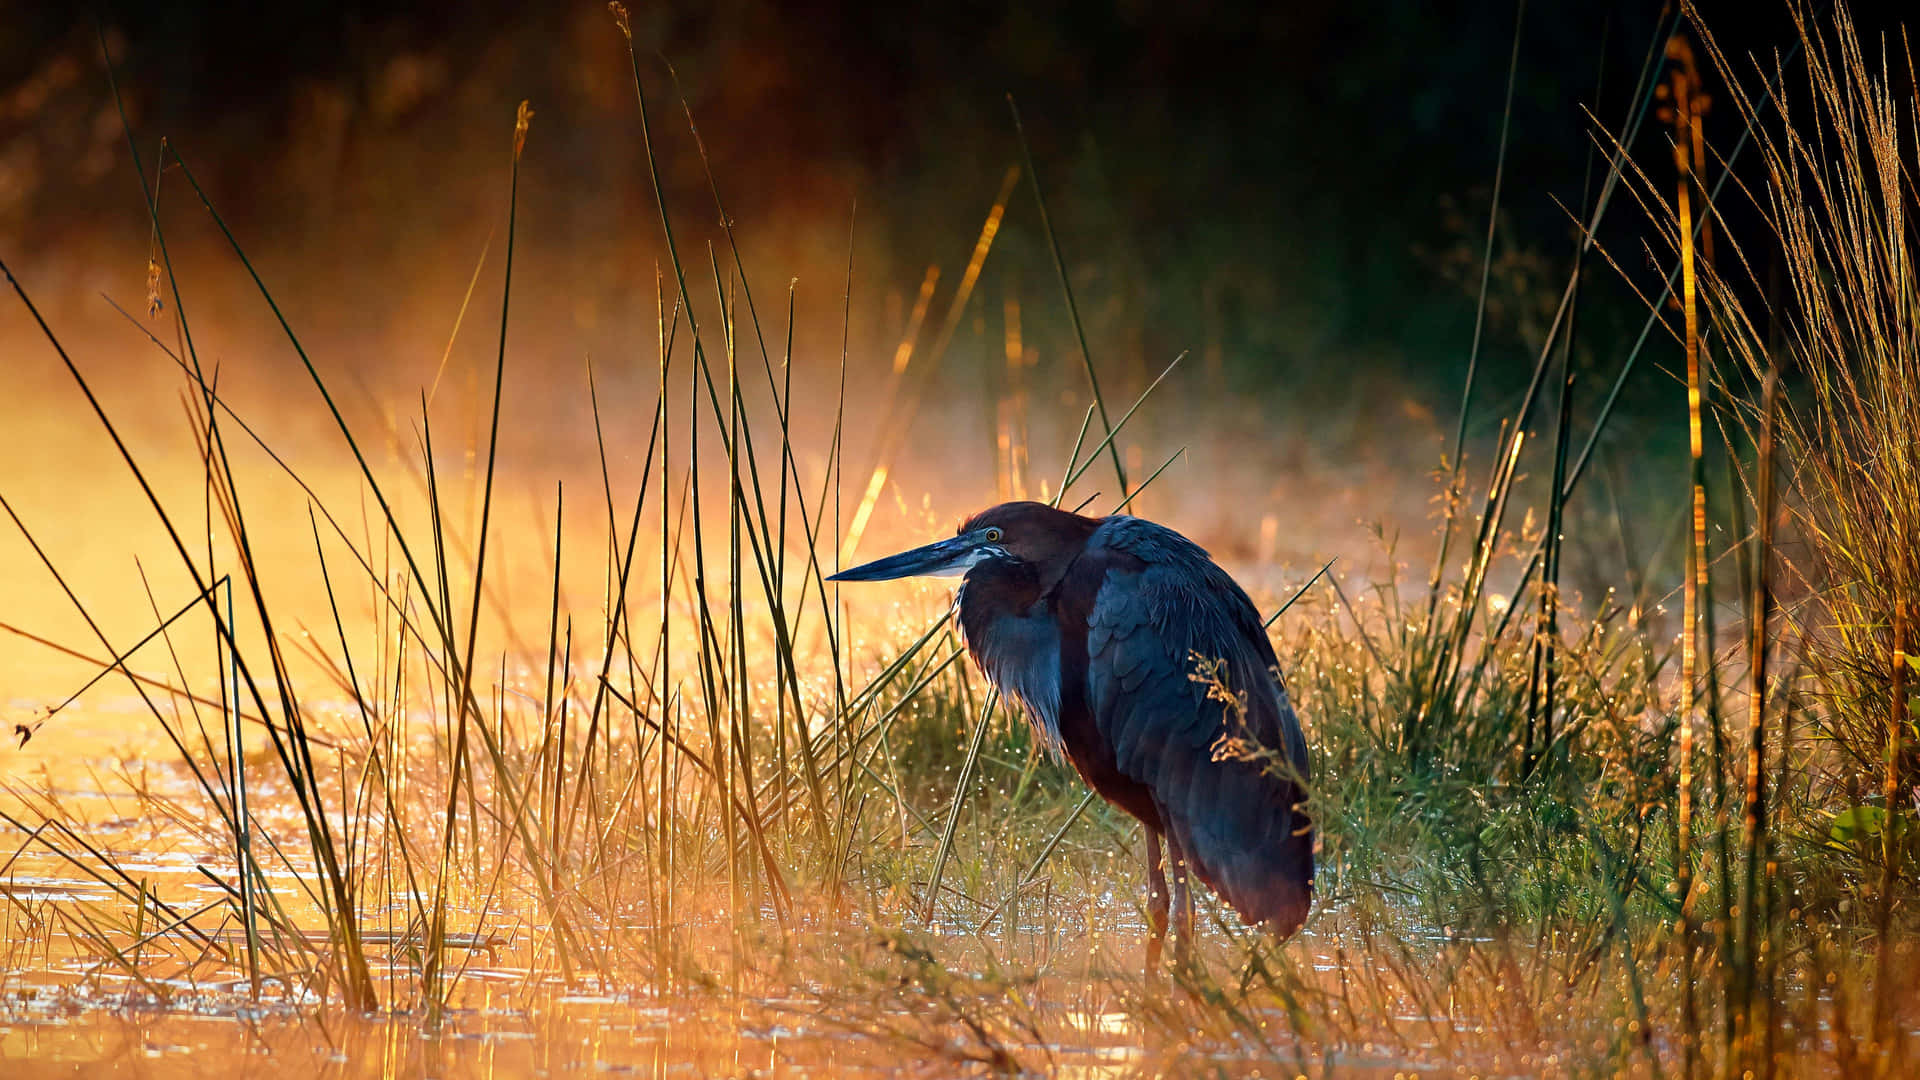 Sunset Heronin Wetlands.jpg Wallpaper